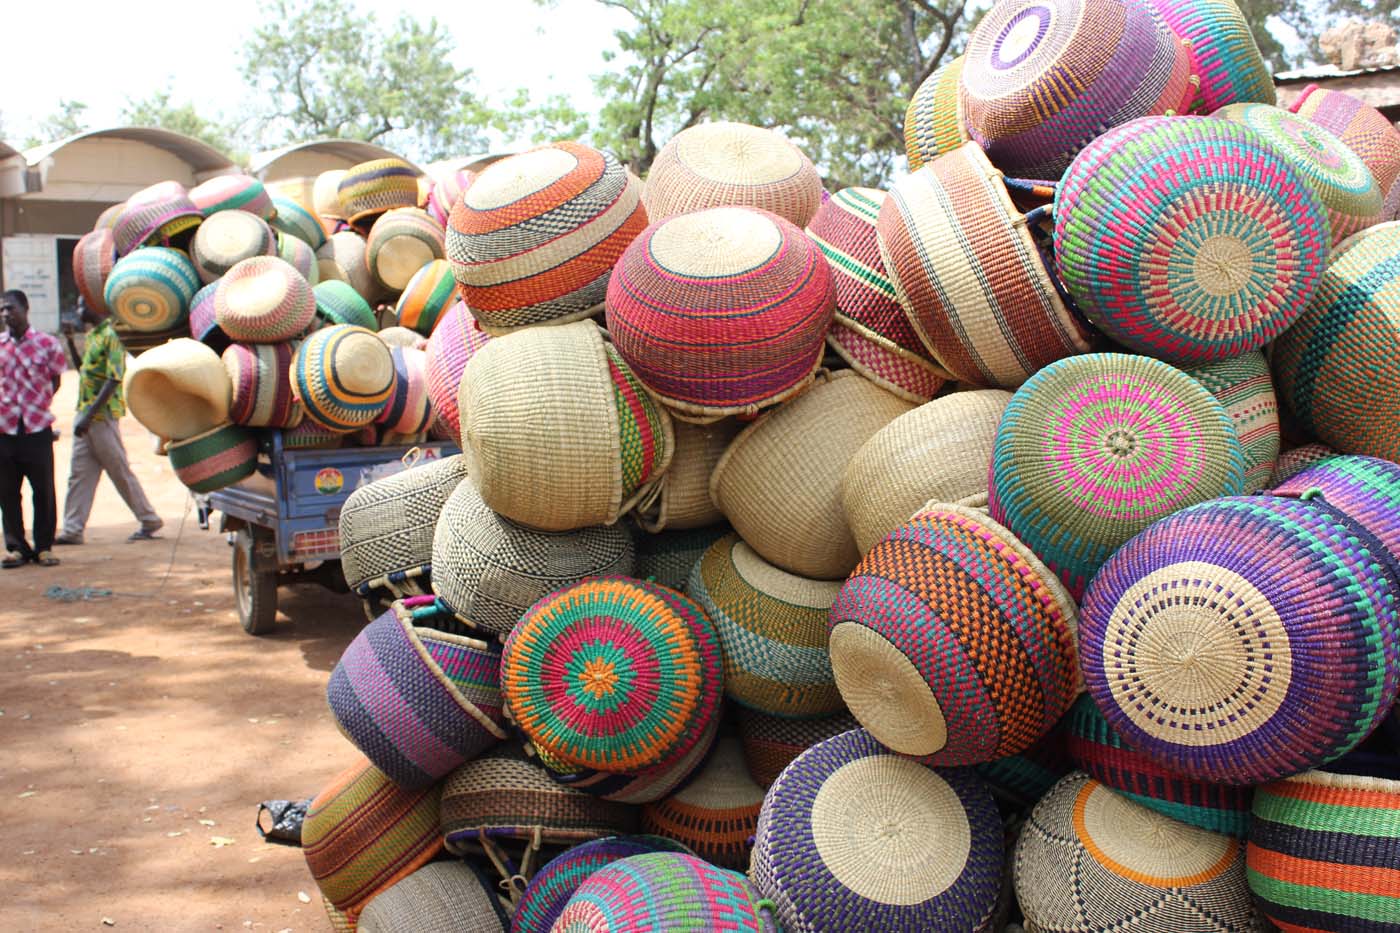 Baskets piled up high post-market